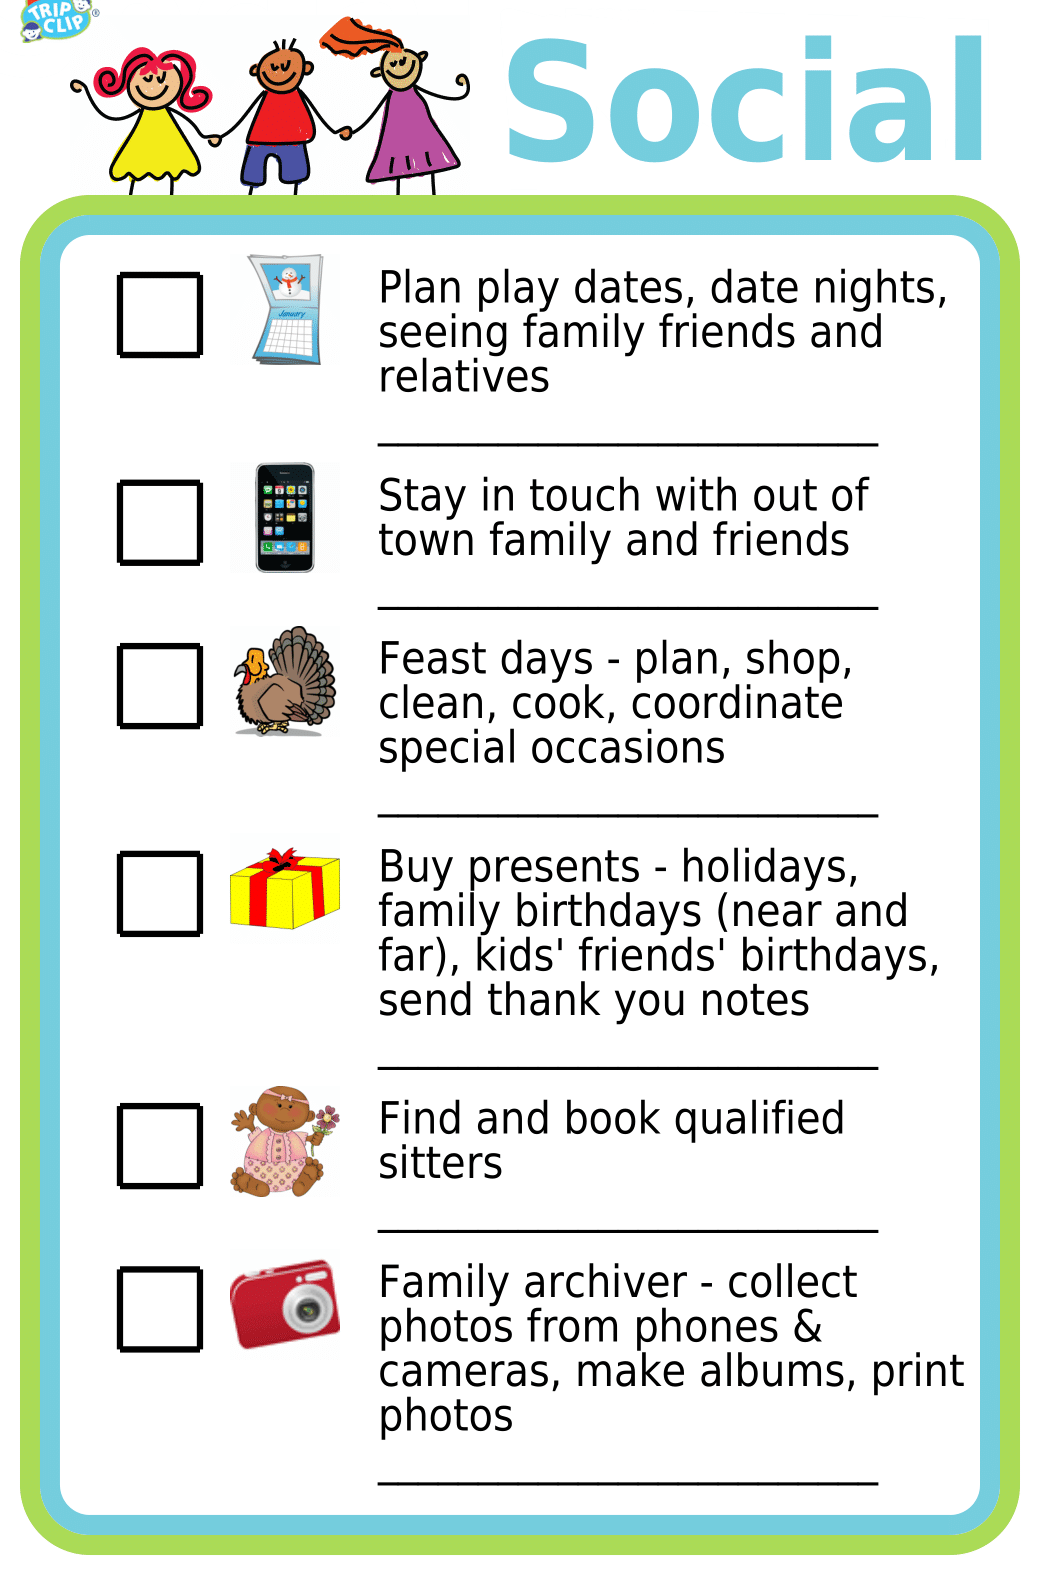 Editable worksheet showing 8 emotional labor tasks like handling holidays, planning social outings, and scrapbooking